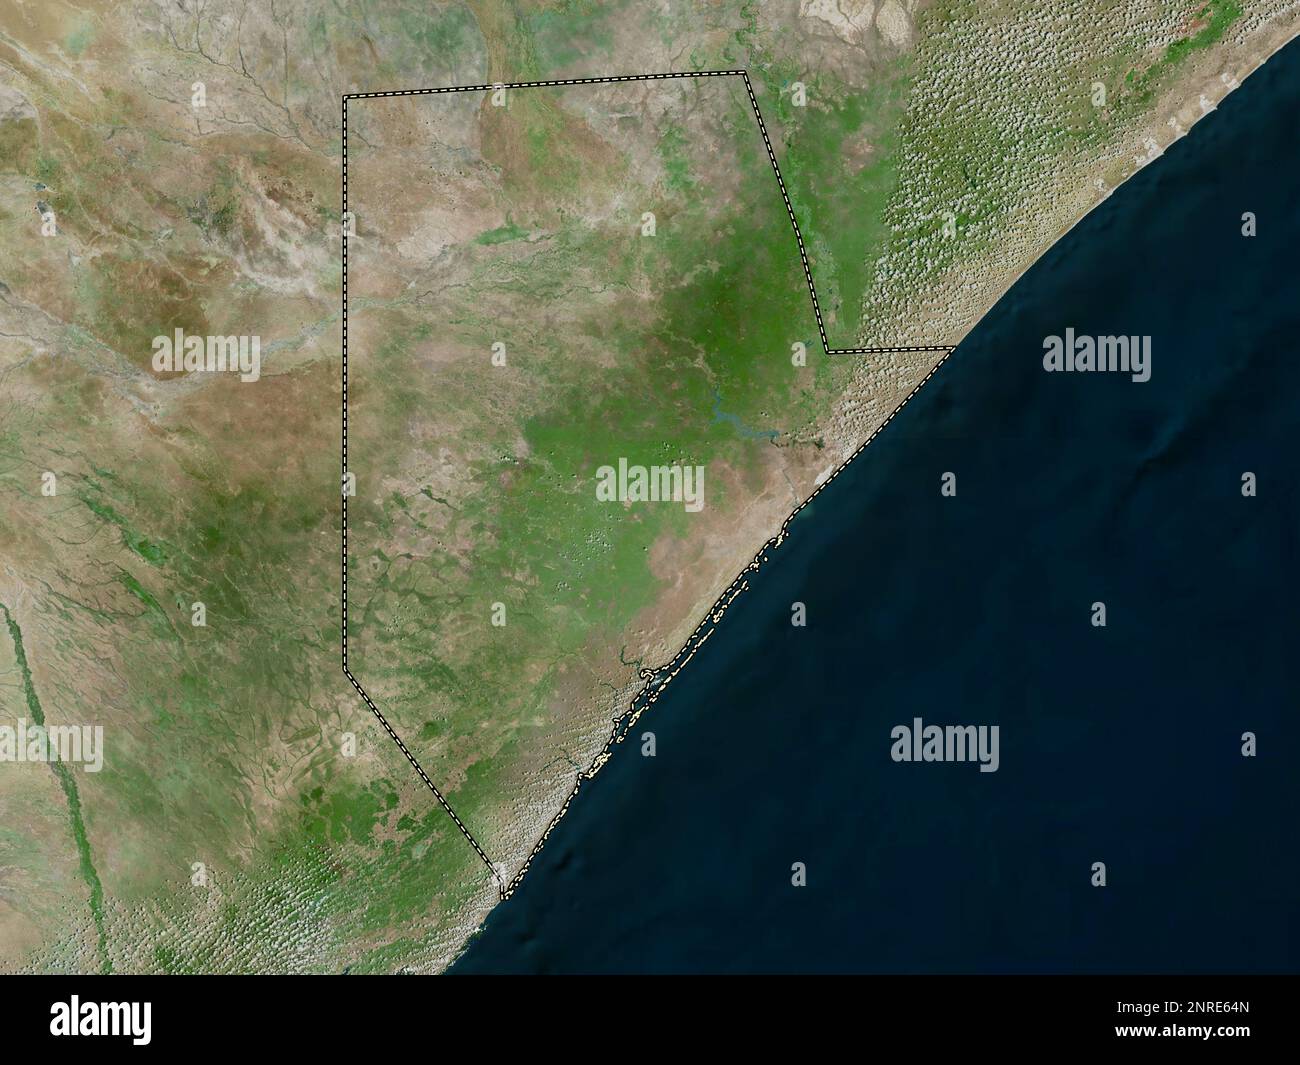 Jubbada Hoose, region of Somalia Mainland. High resolution satellite map Stock Photo